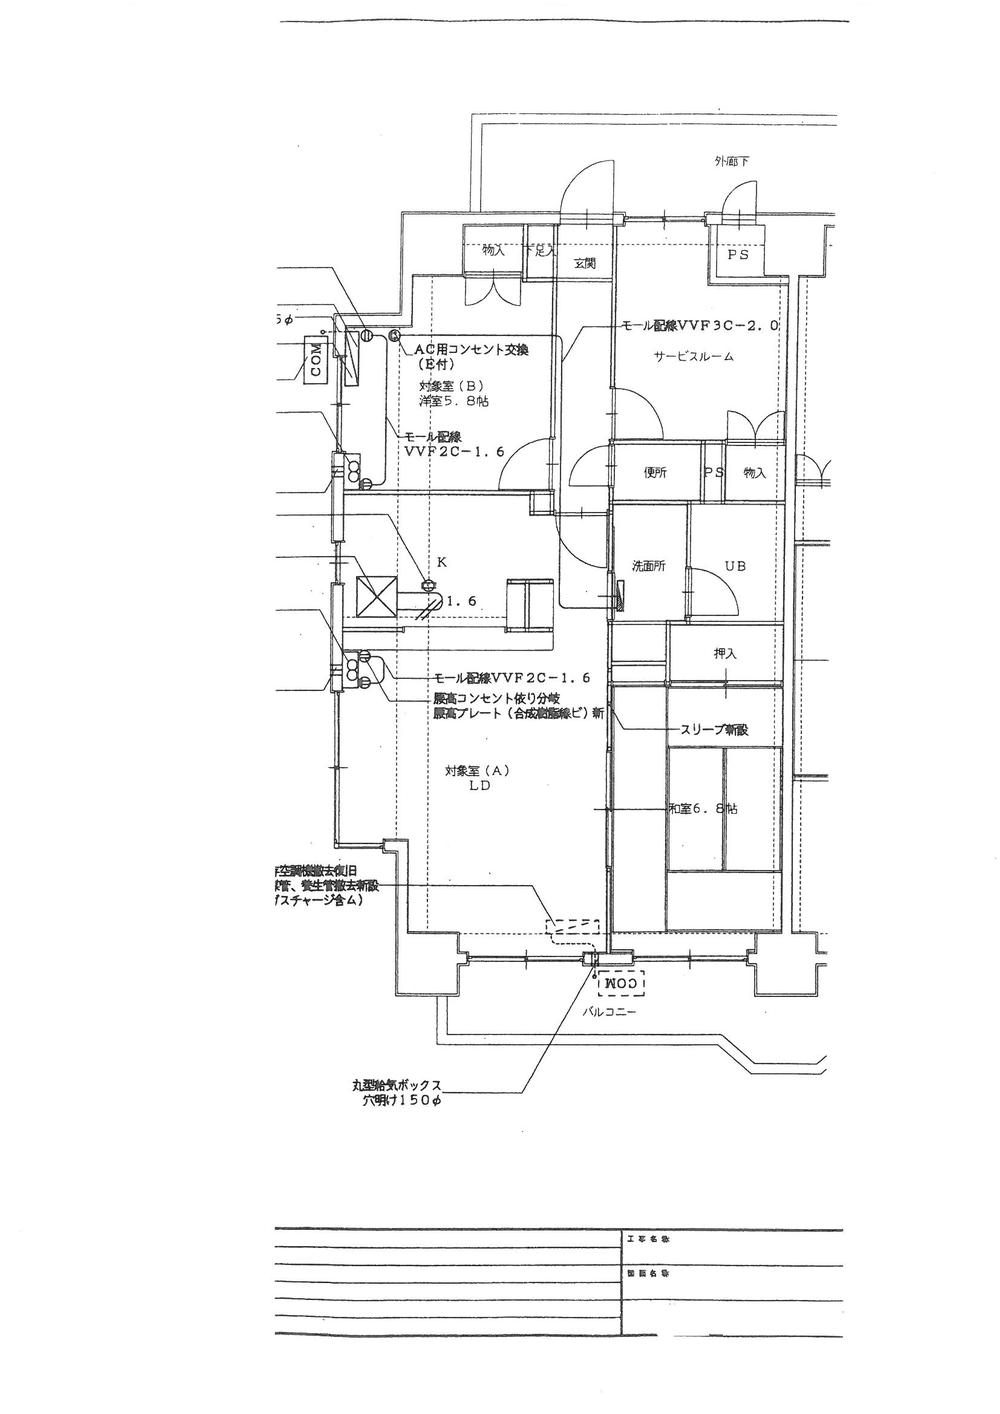 Floor plan. 3LDK, Price 7.8 million yen, Occupied area 67.87 sq m